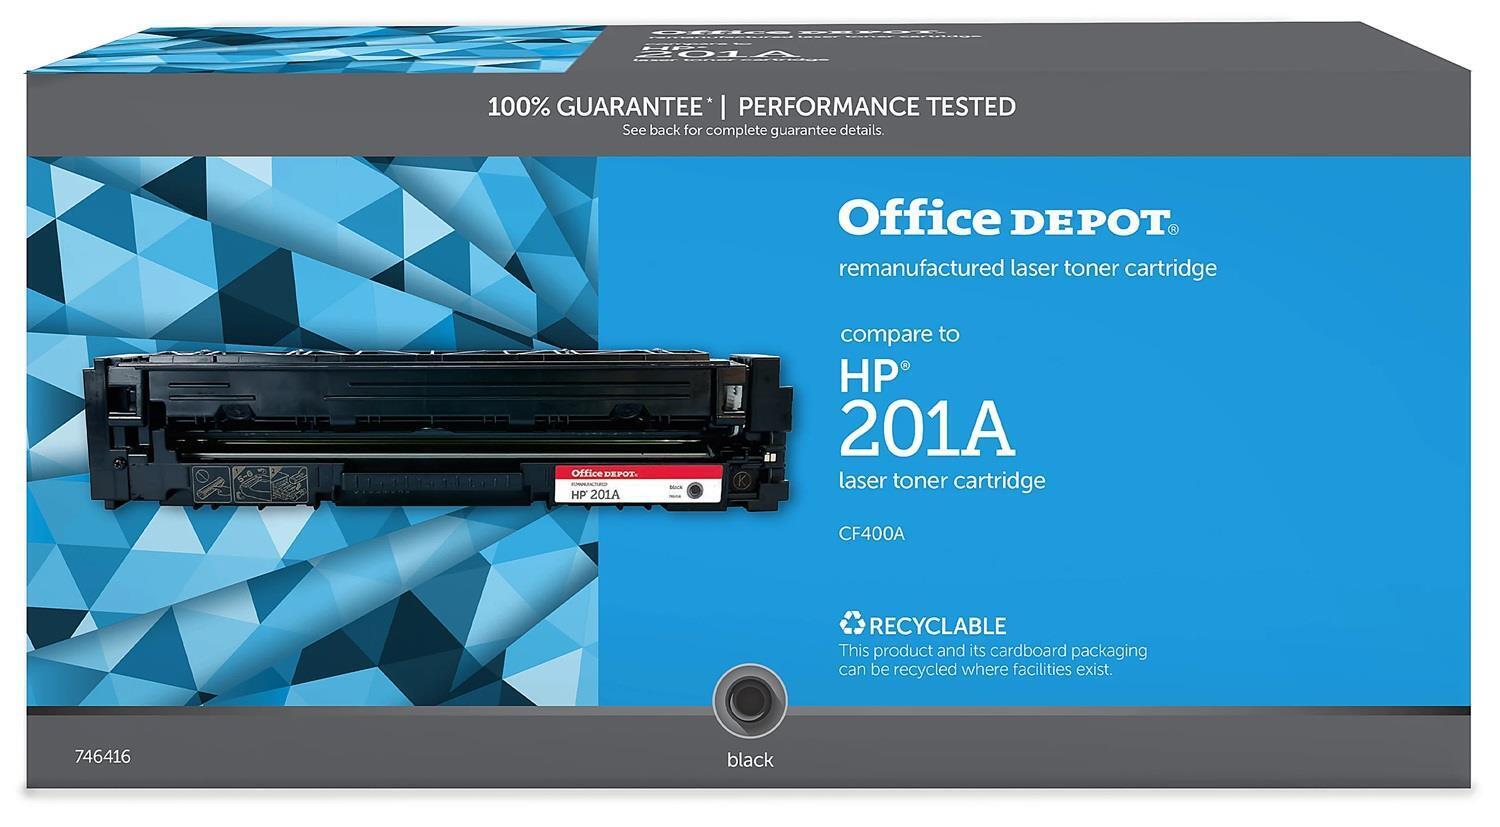 Office Depot Reman Laser Toner Cartridge Replaces HP 201A, Black